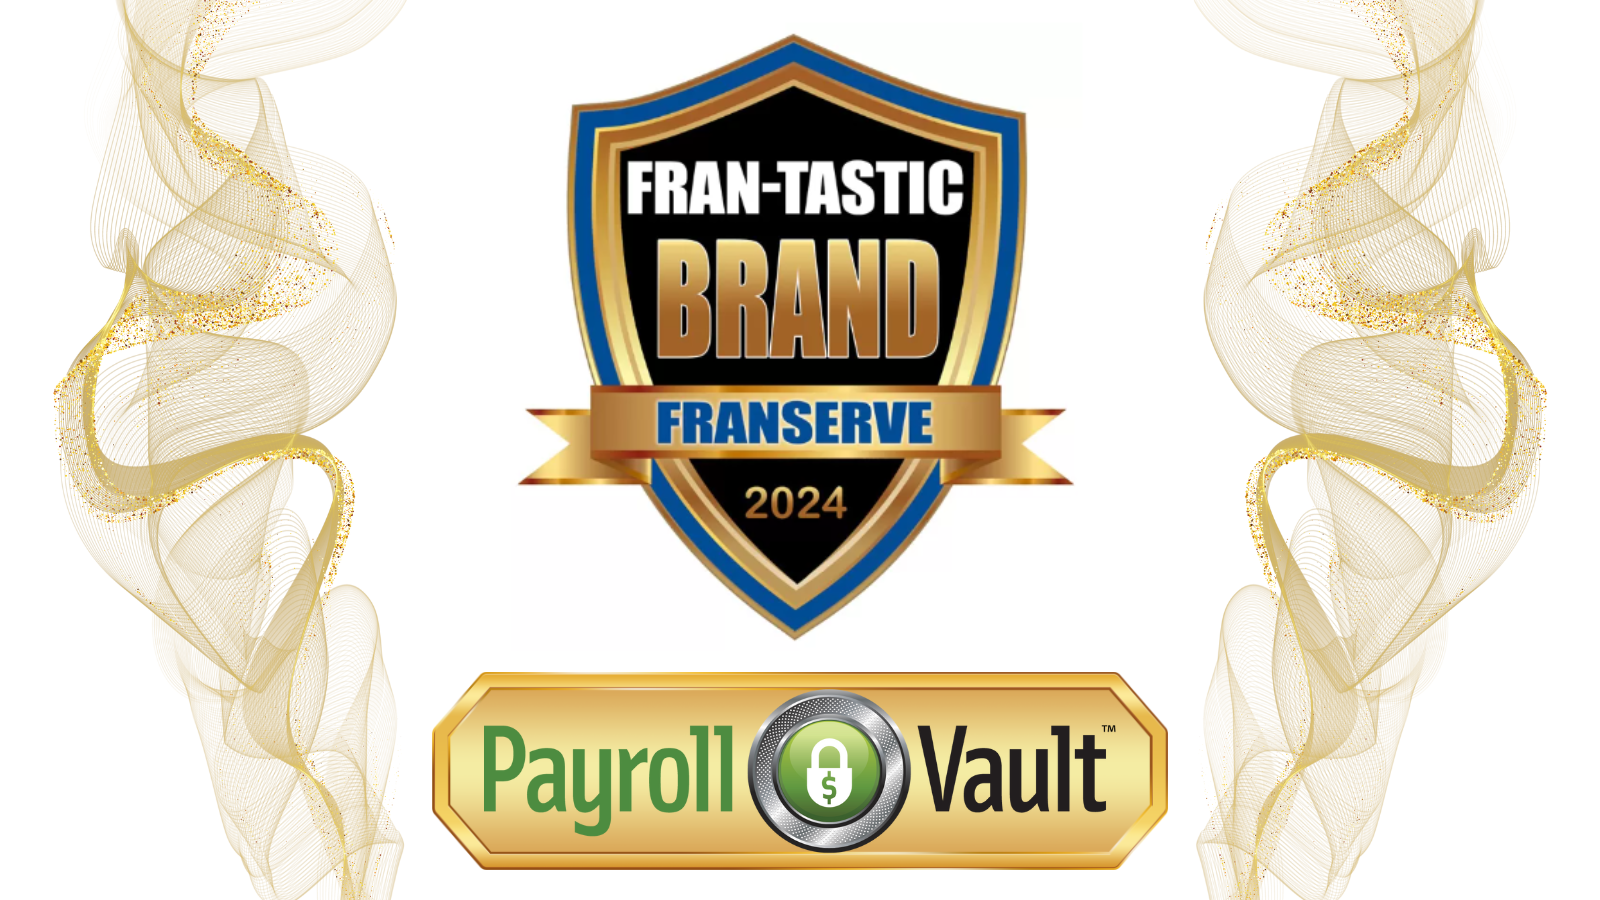 Payroll Vault has been named one of FranServe's FRAN-TASTIC BRANDS 2024!